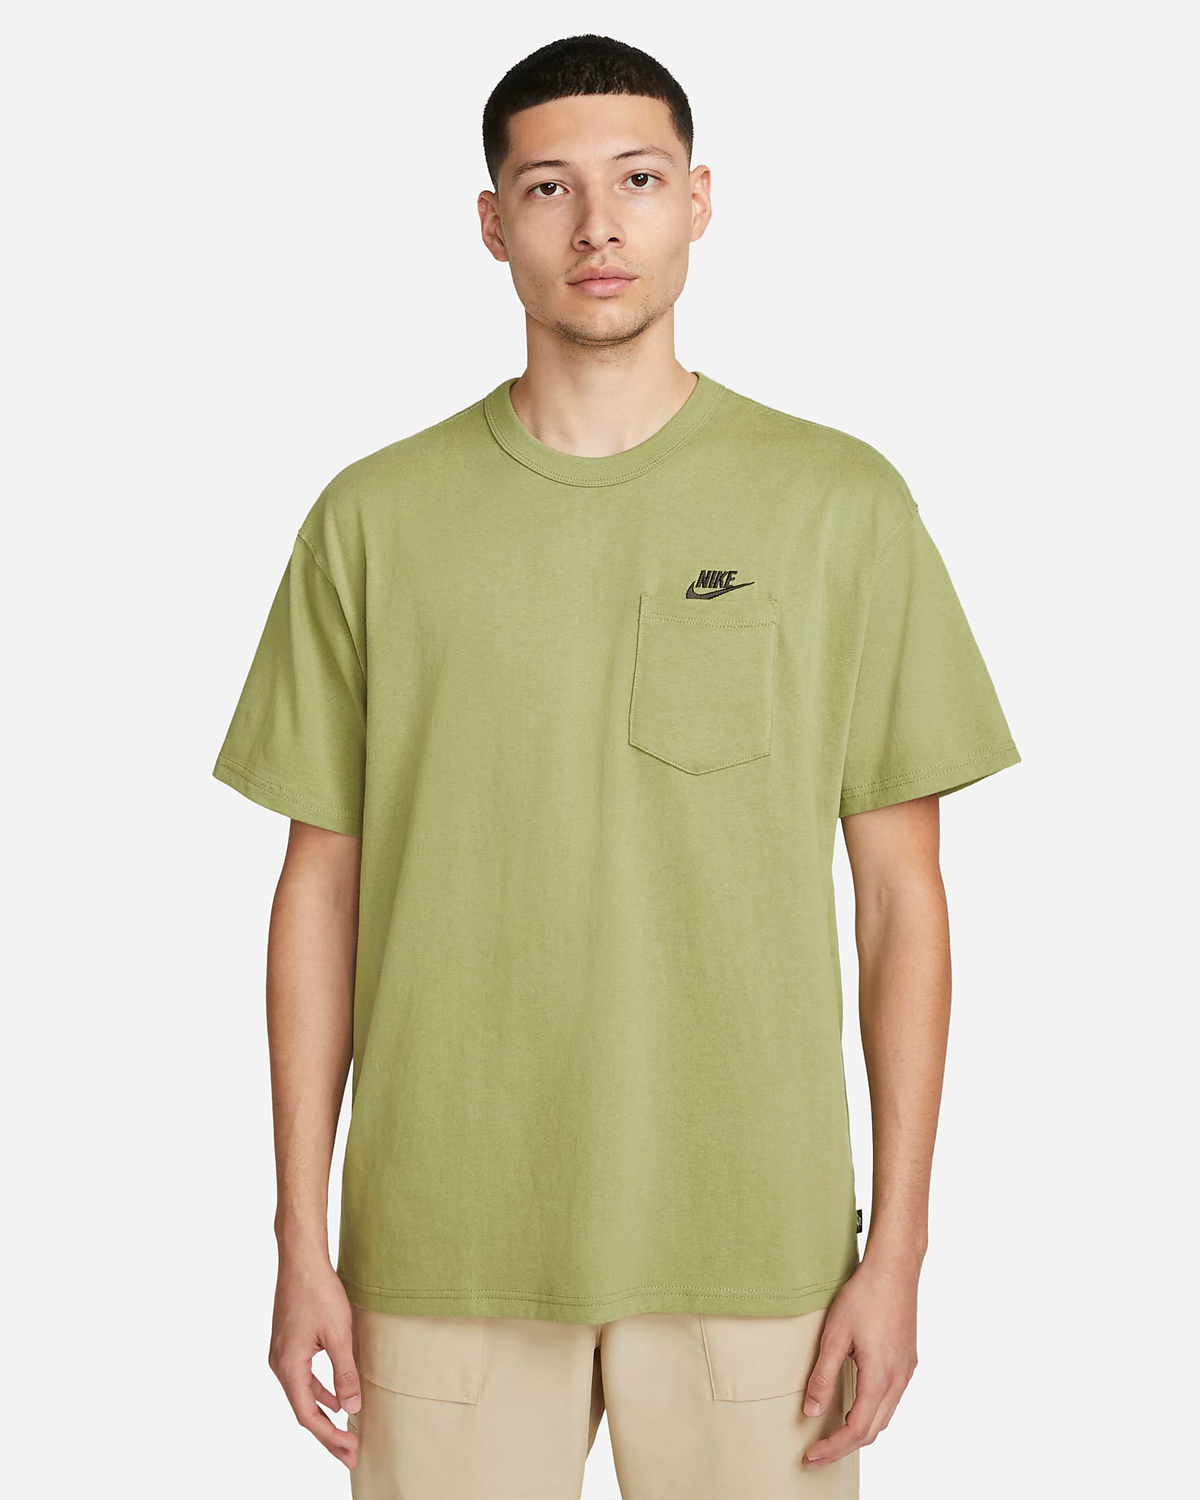 Nike-Sportswear-Pocket-T-Shirt-Alligator-Green